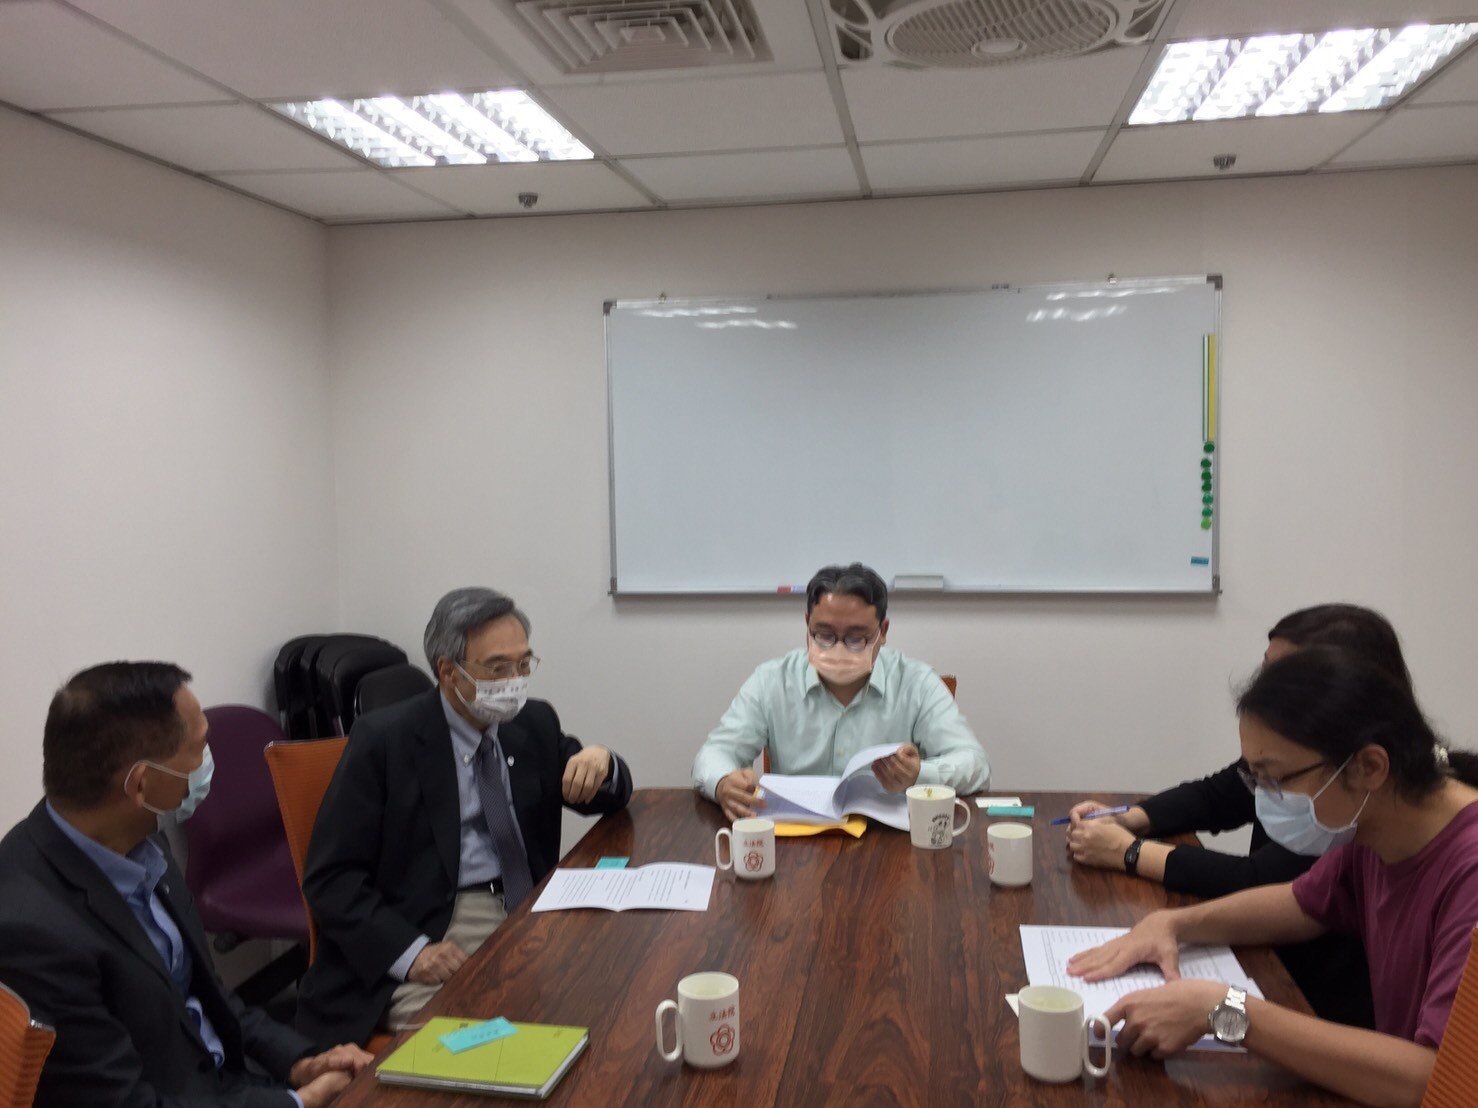 本會拜會立法委員說明仲裁法修正草案<br>CAA visits and explains to Legislator the Draft Amendment to Taiwan’s Arbitration Law